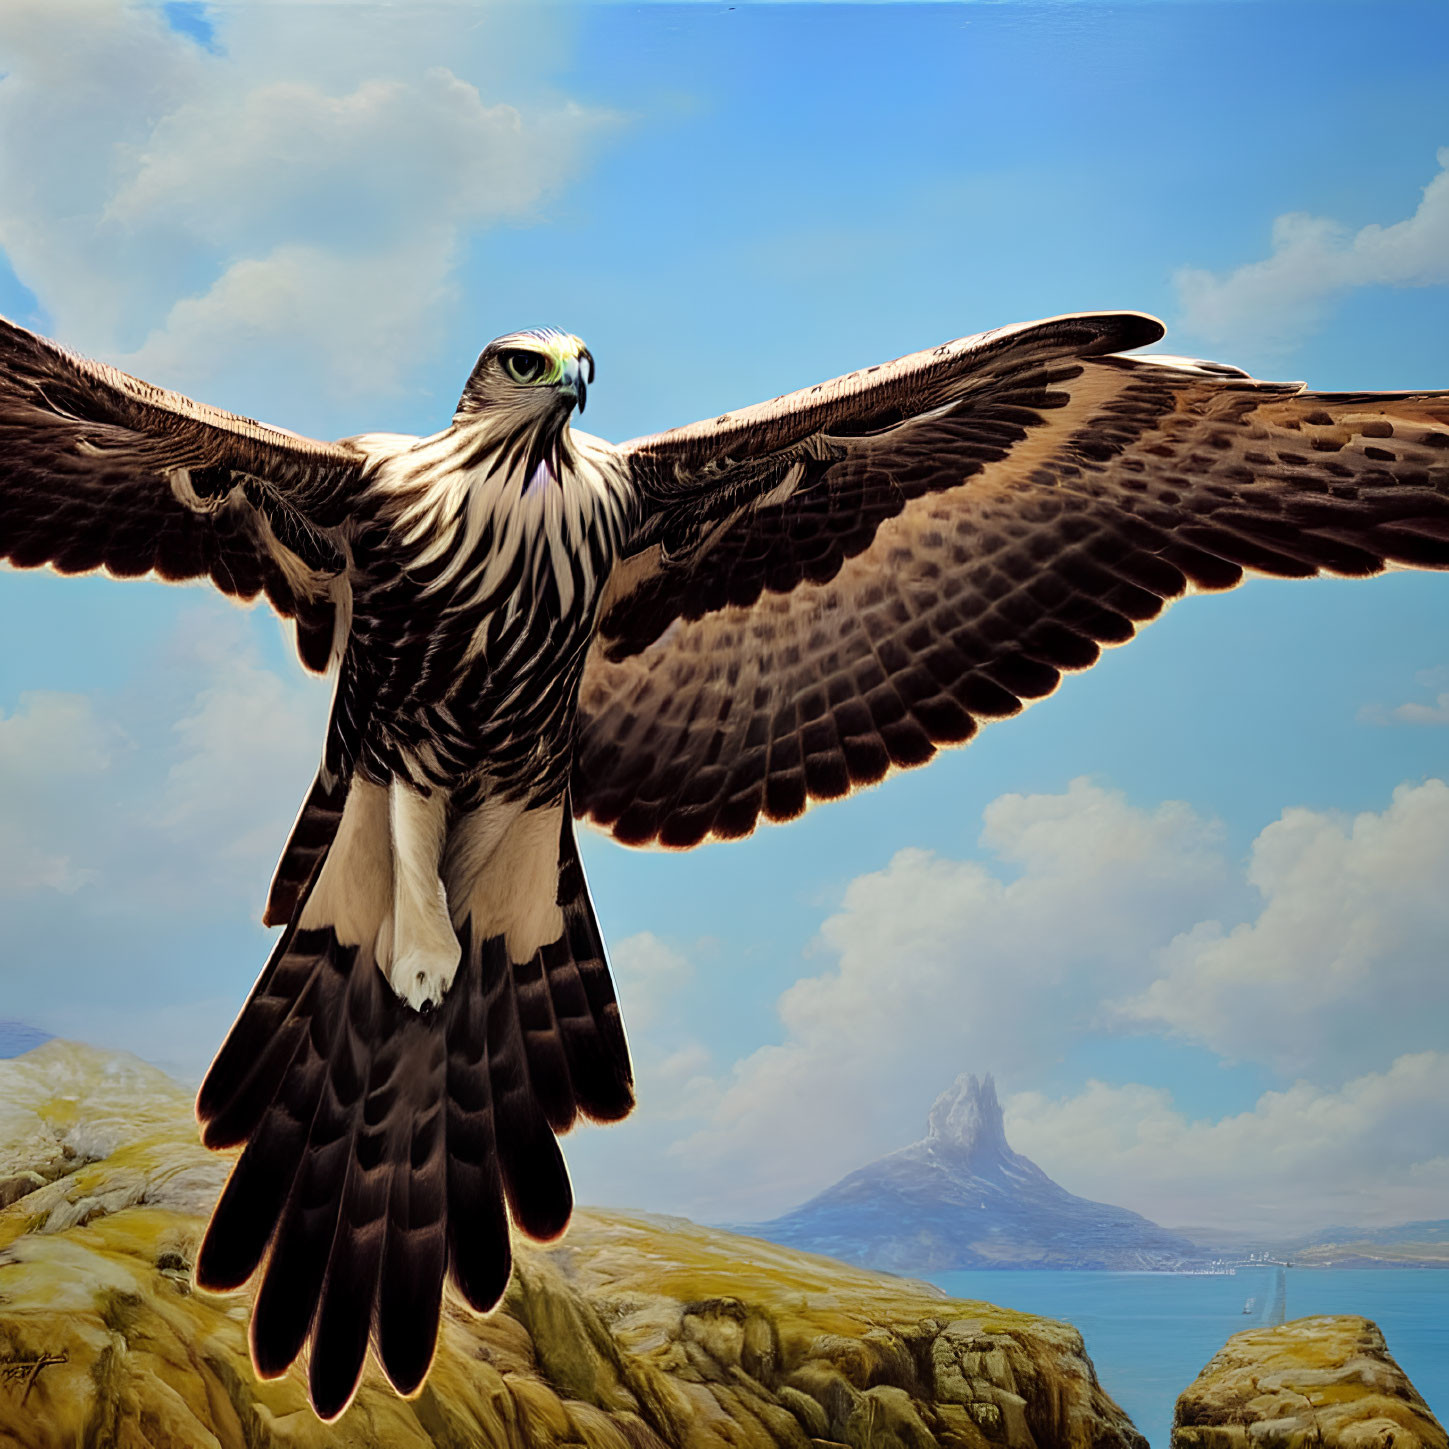 Osprey soaring over rocky coastal terrain under blue sky